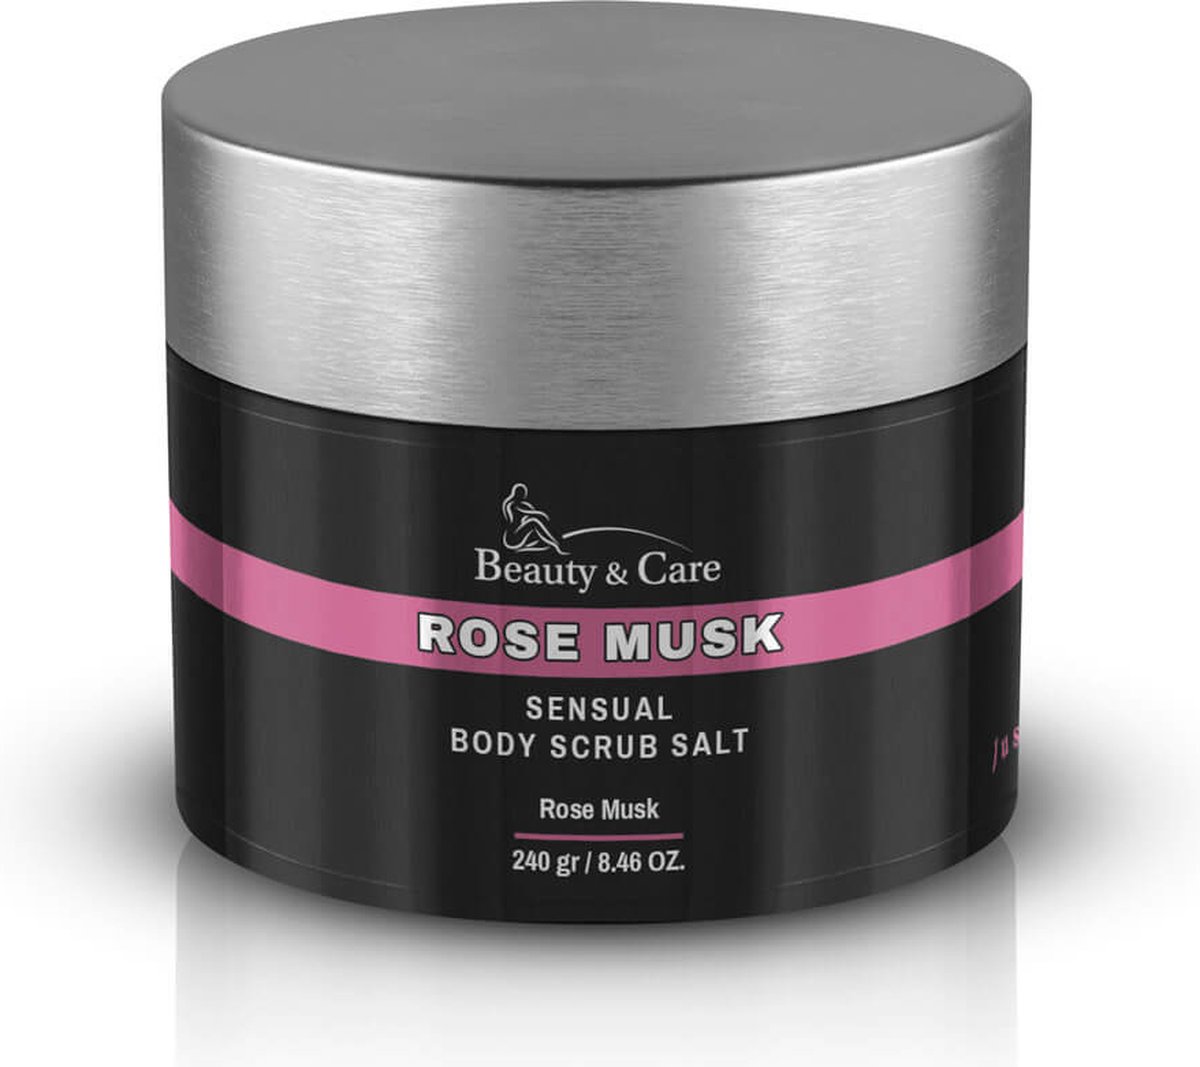 Beauty & Care - Rose Musk Body Scrub Salt - 240 g. new